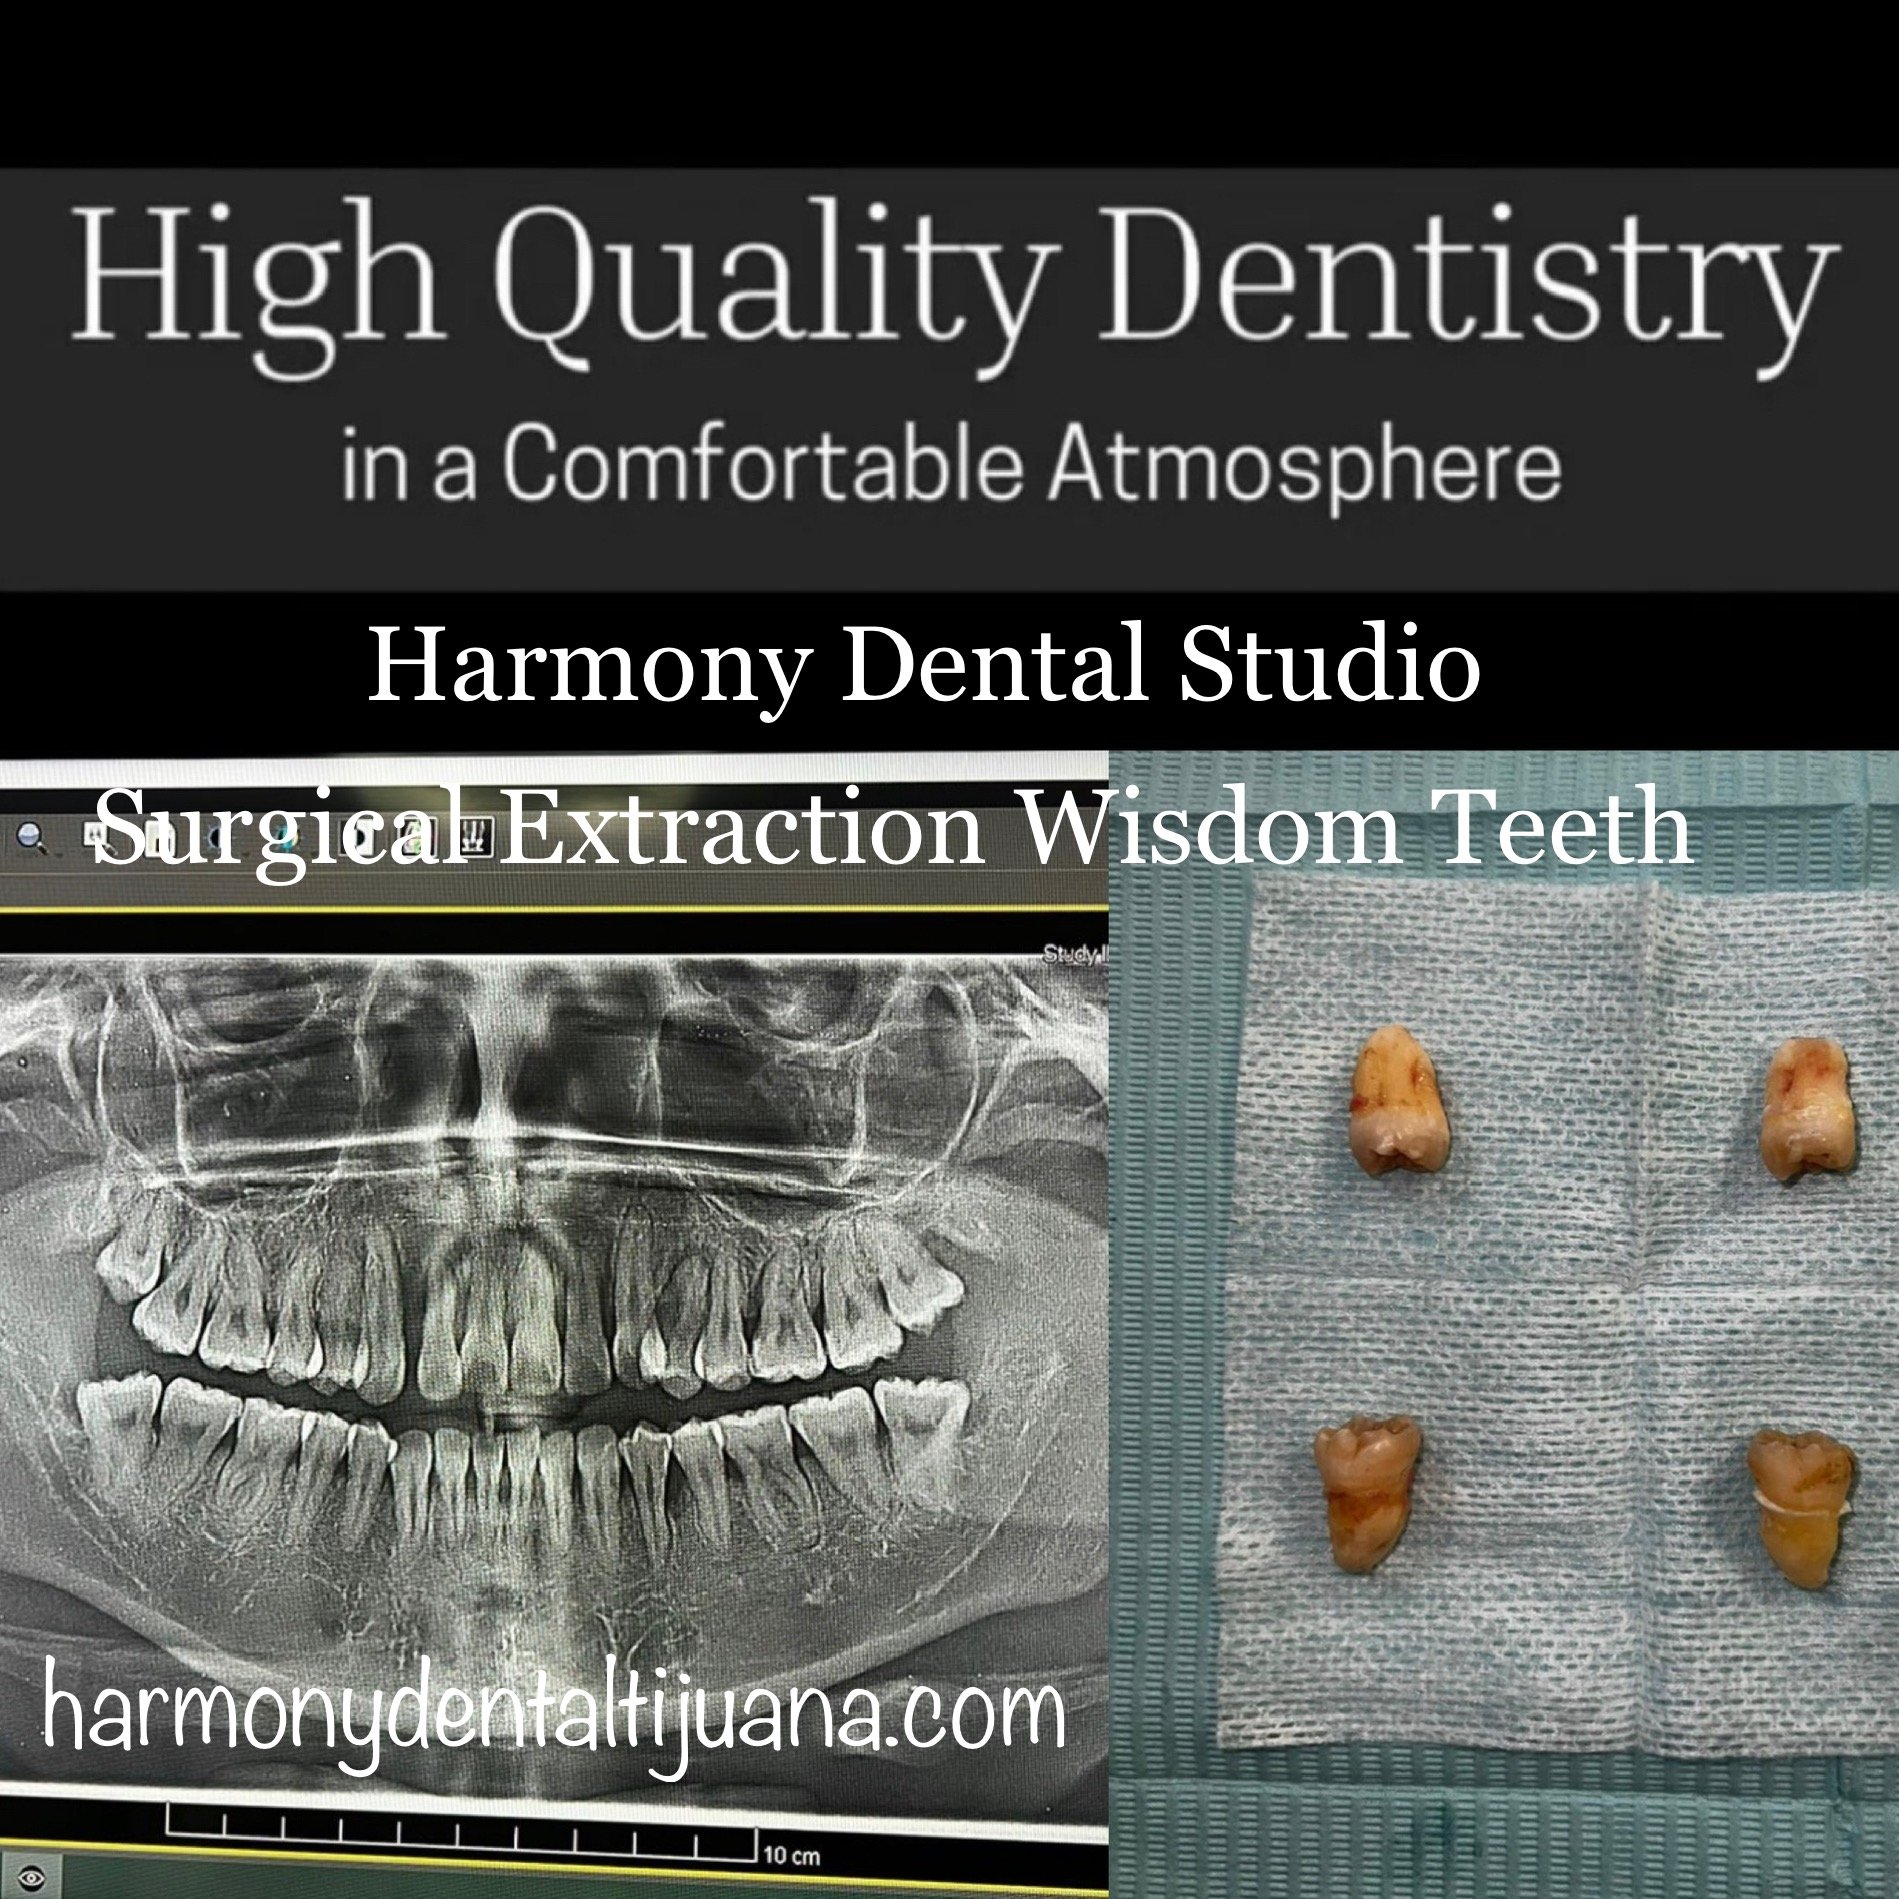 Surgical extraction wisdom teeth.jpg